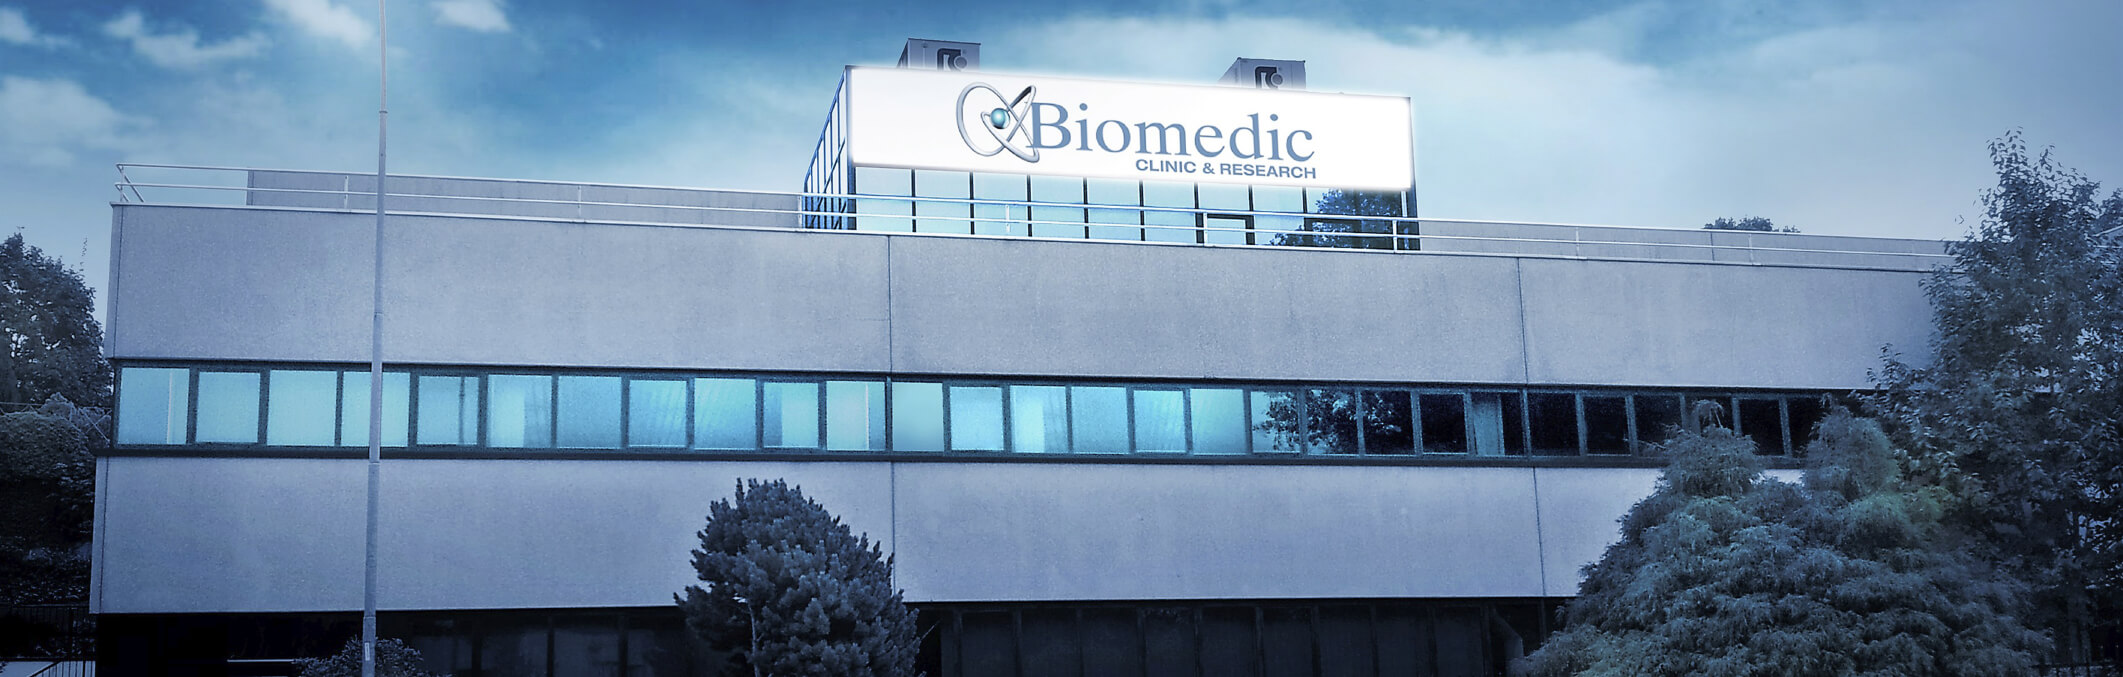 Biomedic Clinic & Research sede